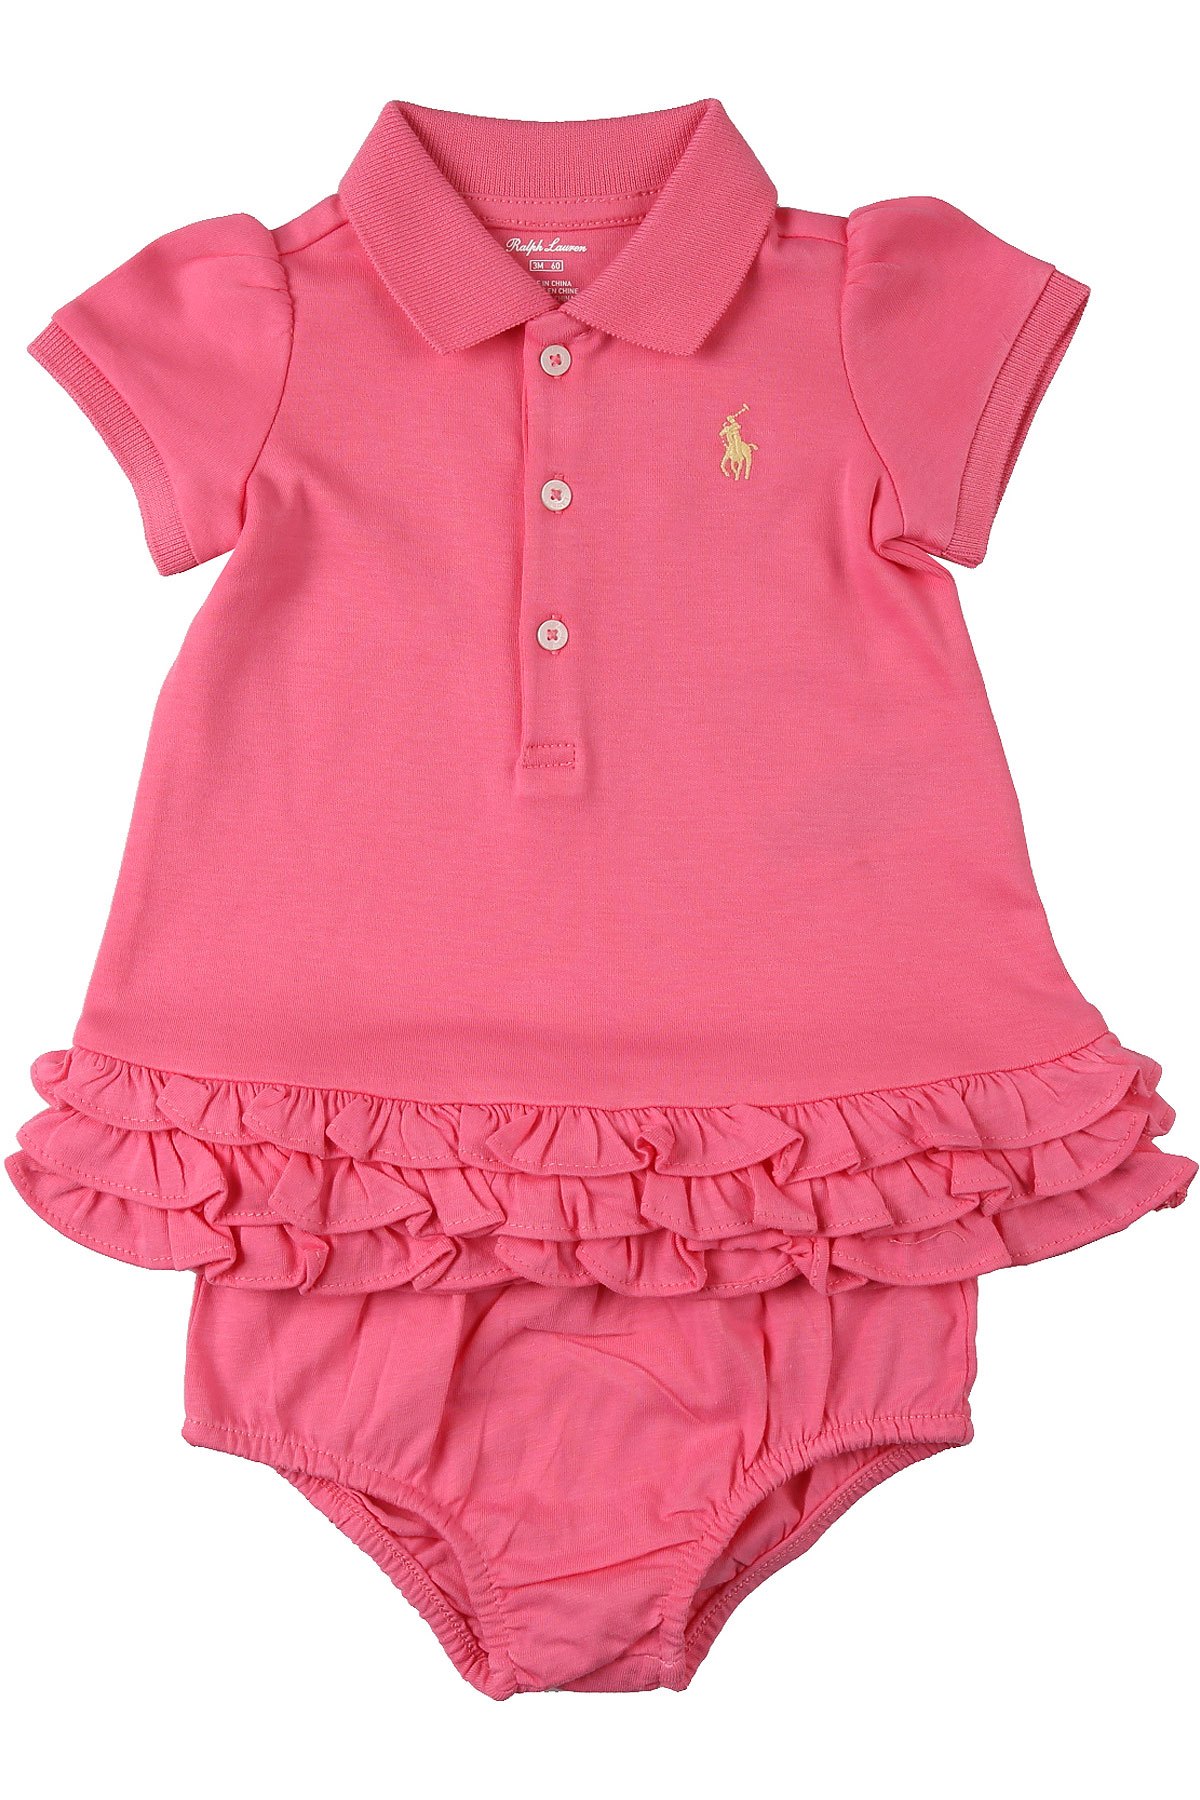 Baby Girl Clothing Ralph Lauren, Style code: 310734891007--